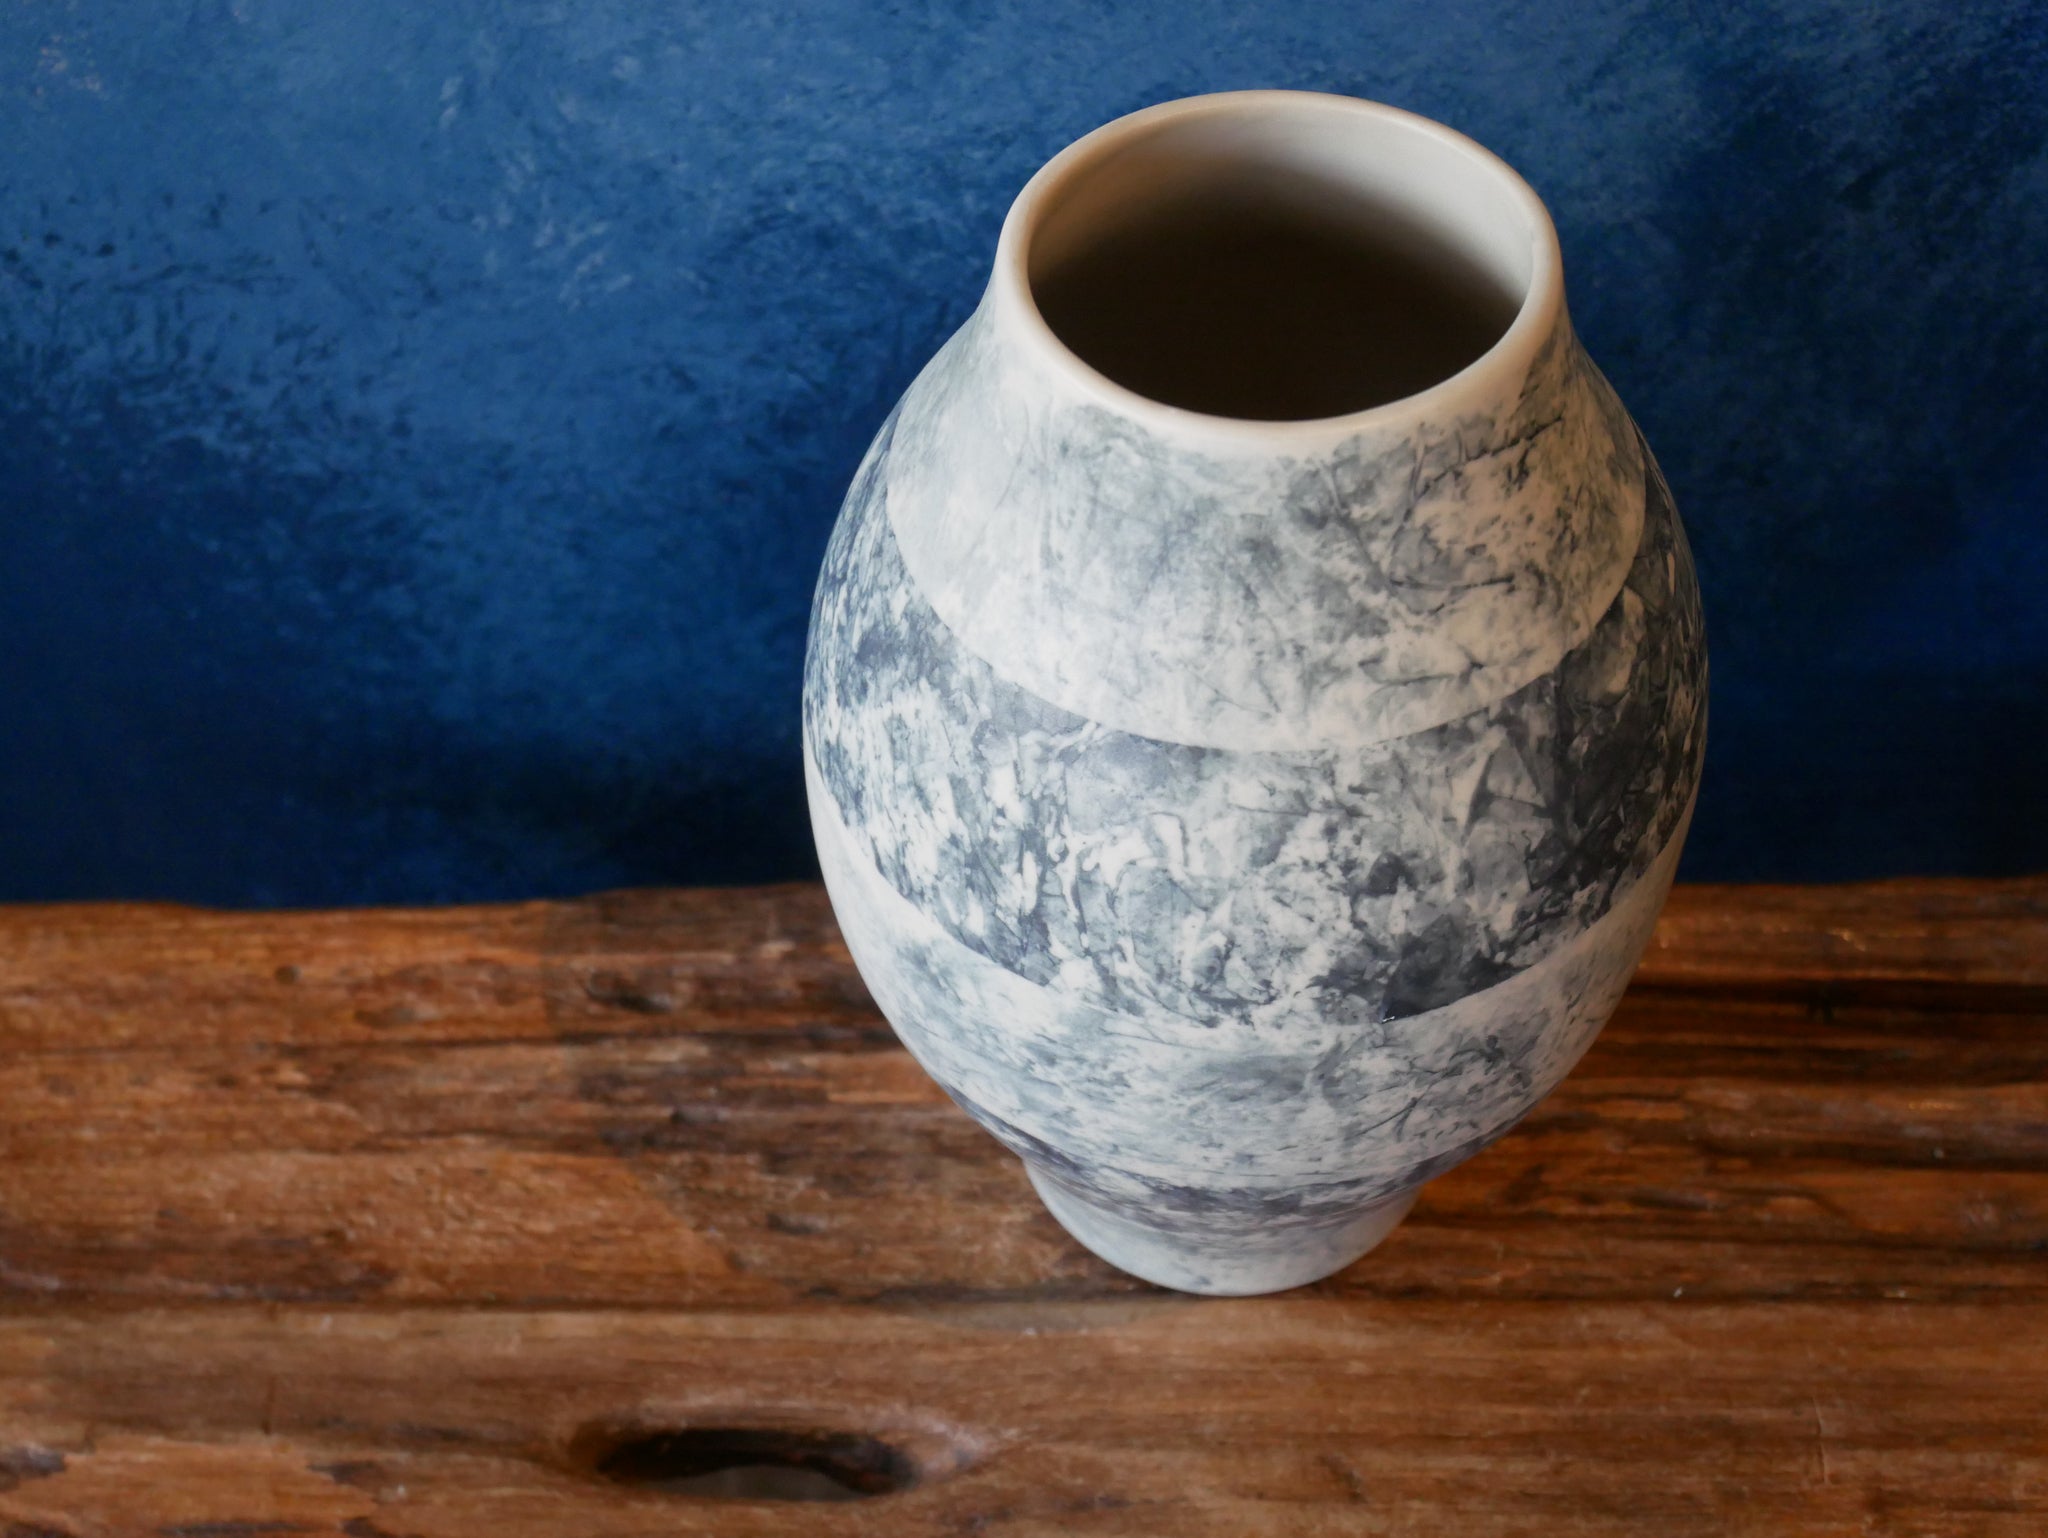 Marble pattern vase - ll